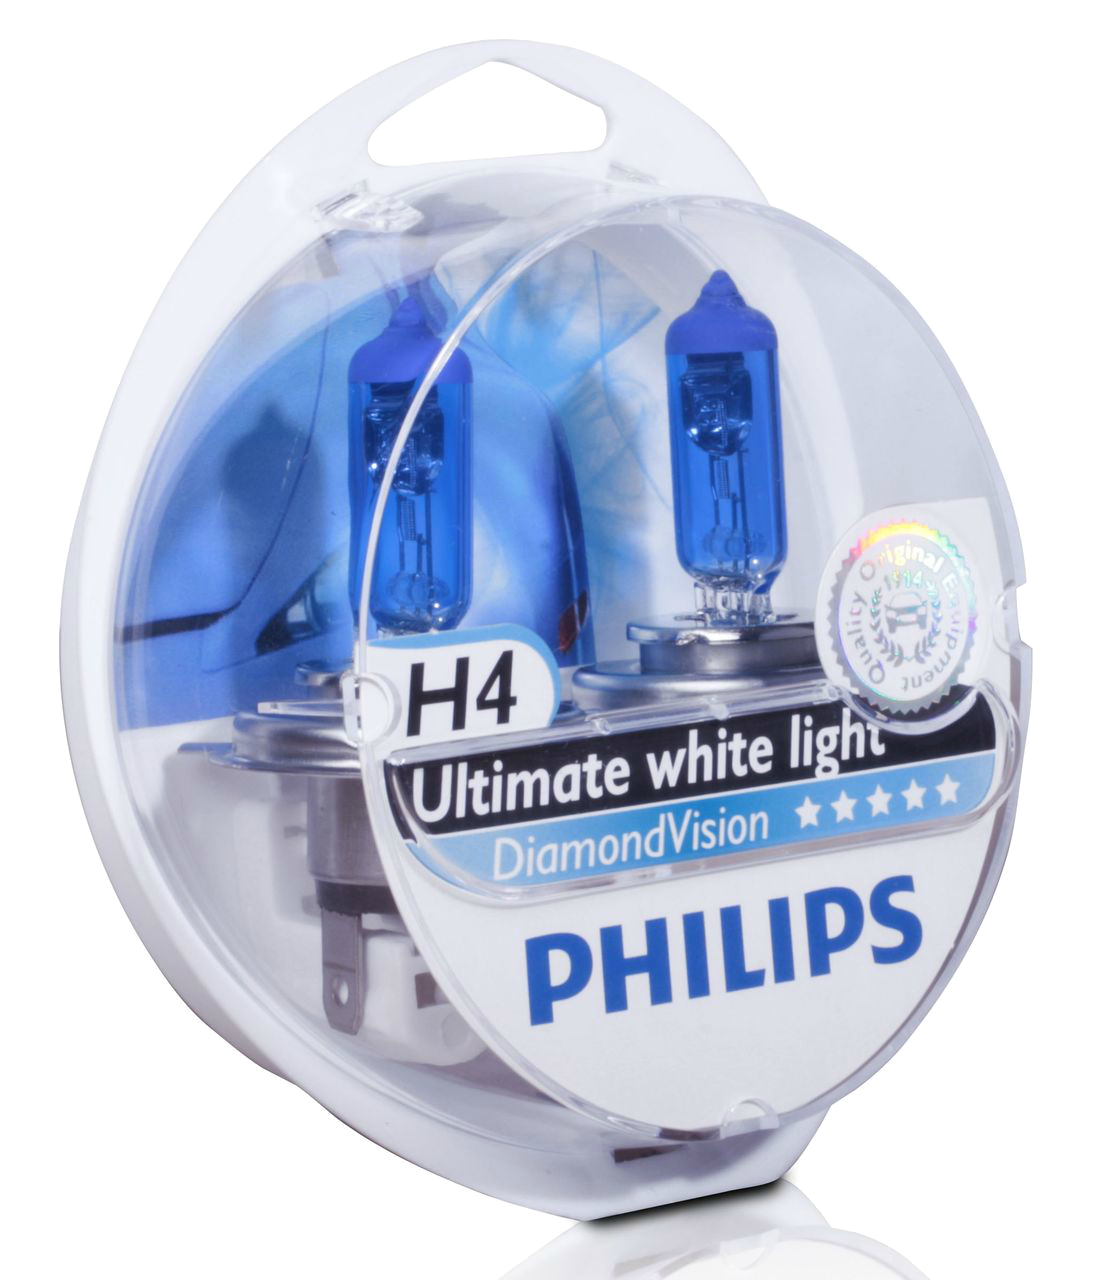 Филипс вижн. Лампы Philips h4 55\60w-12v Diamond Vision 5000k. H4 Philips 12342dvs2. Philips 12v h4 60/55w Diamond Vision. Лампа h4 12v 60/55w Philips.